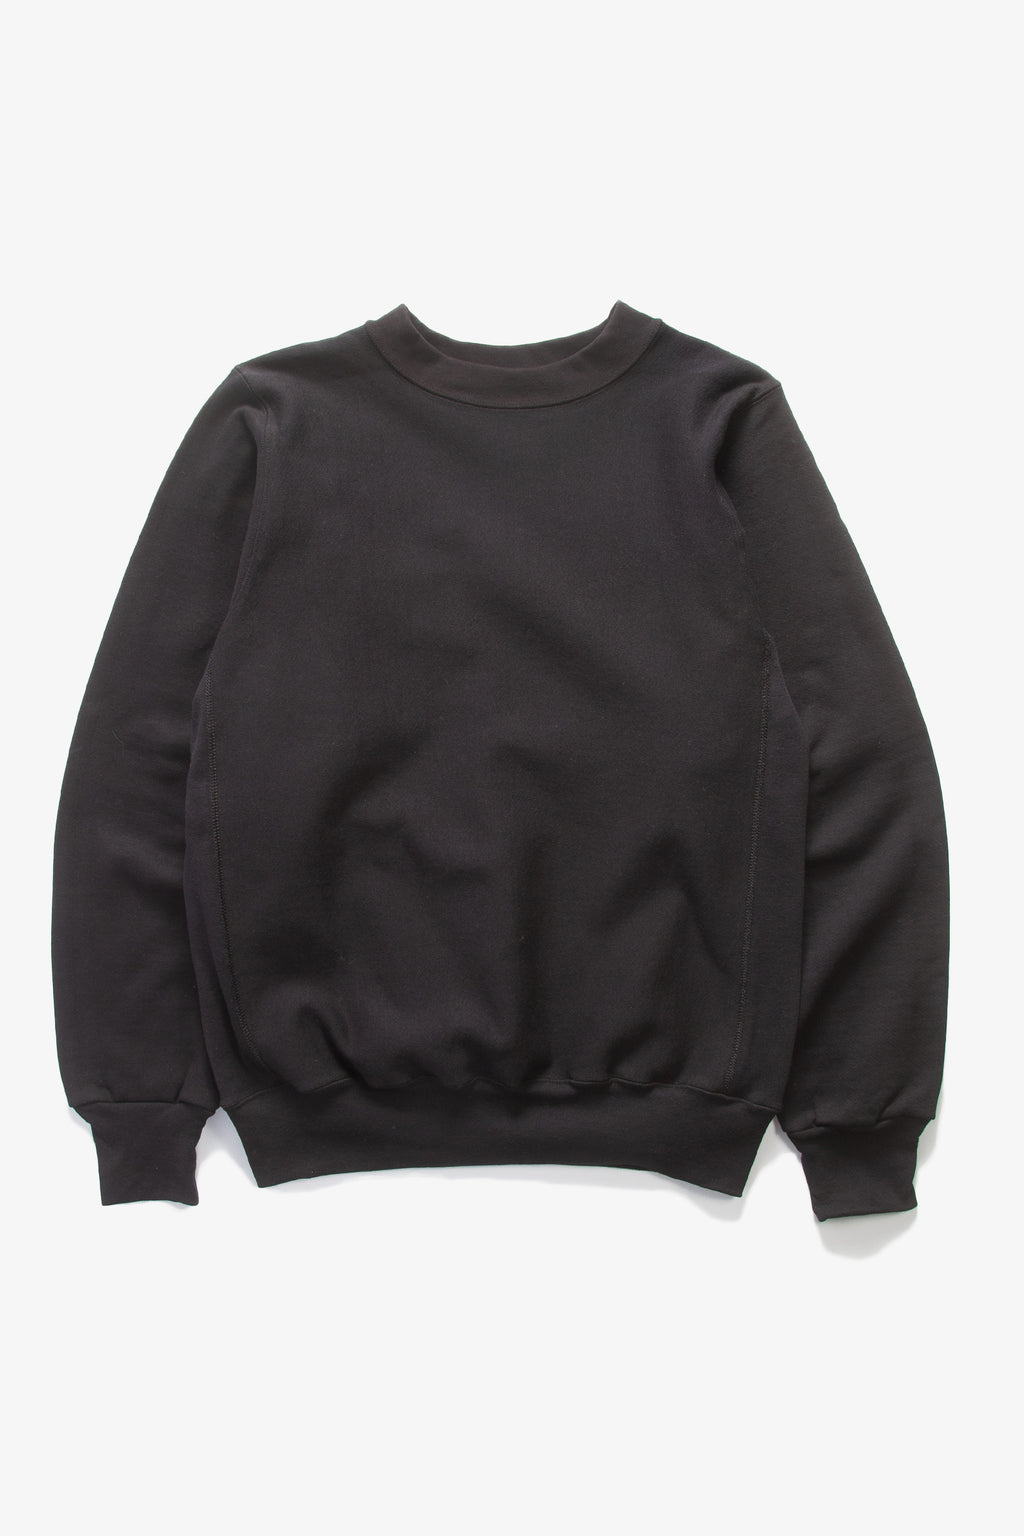 Lifewear USA - 12oz Sweatshirt - Black